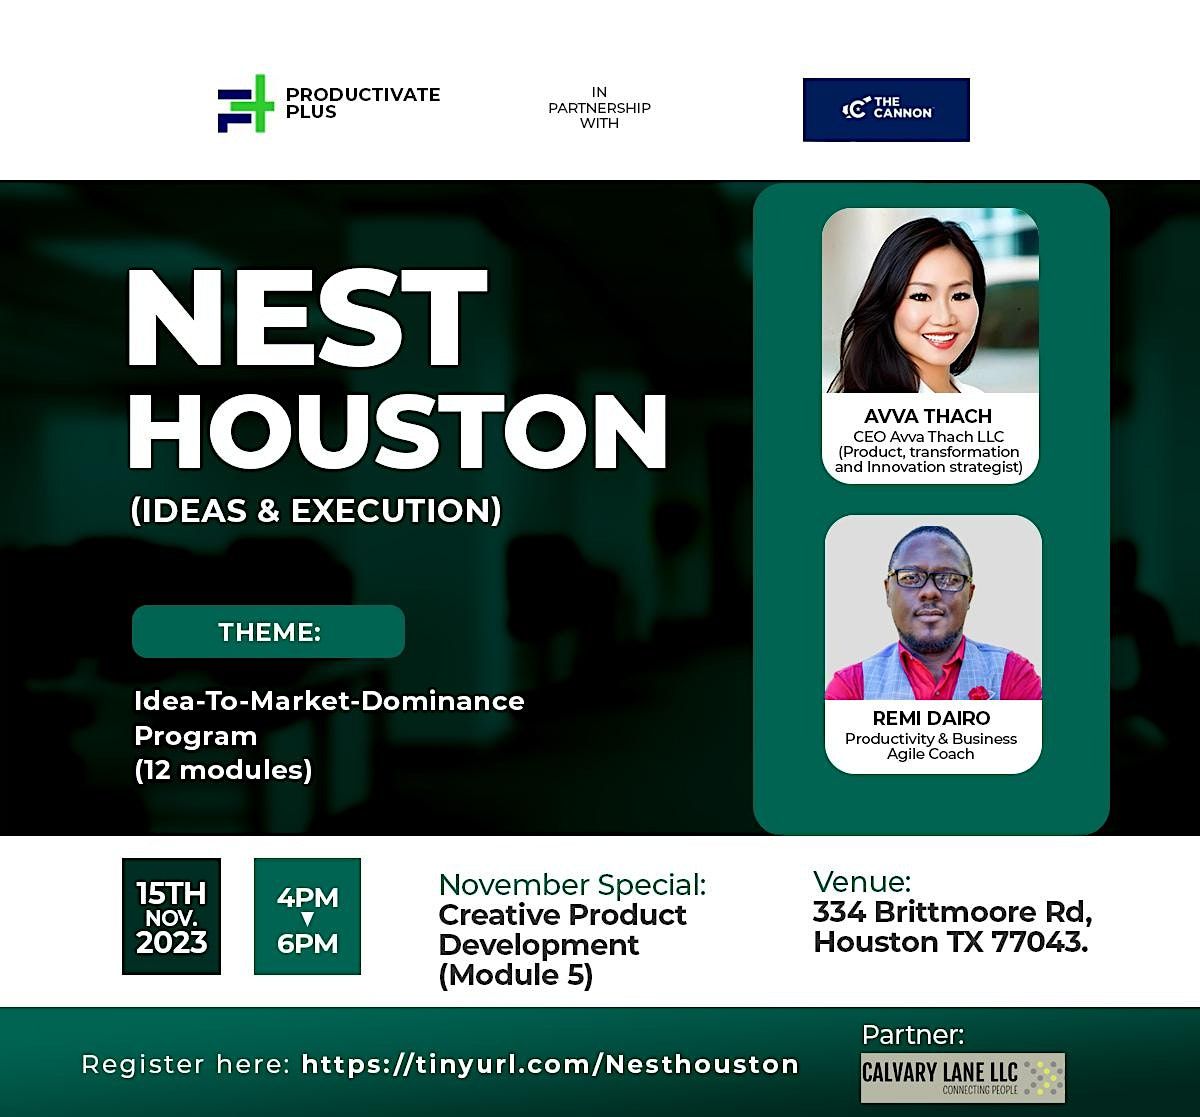 Nest Houston - From Idea To Market Dominance (12 modules)